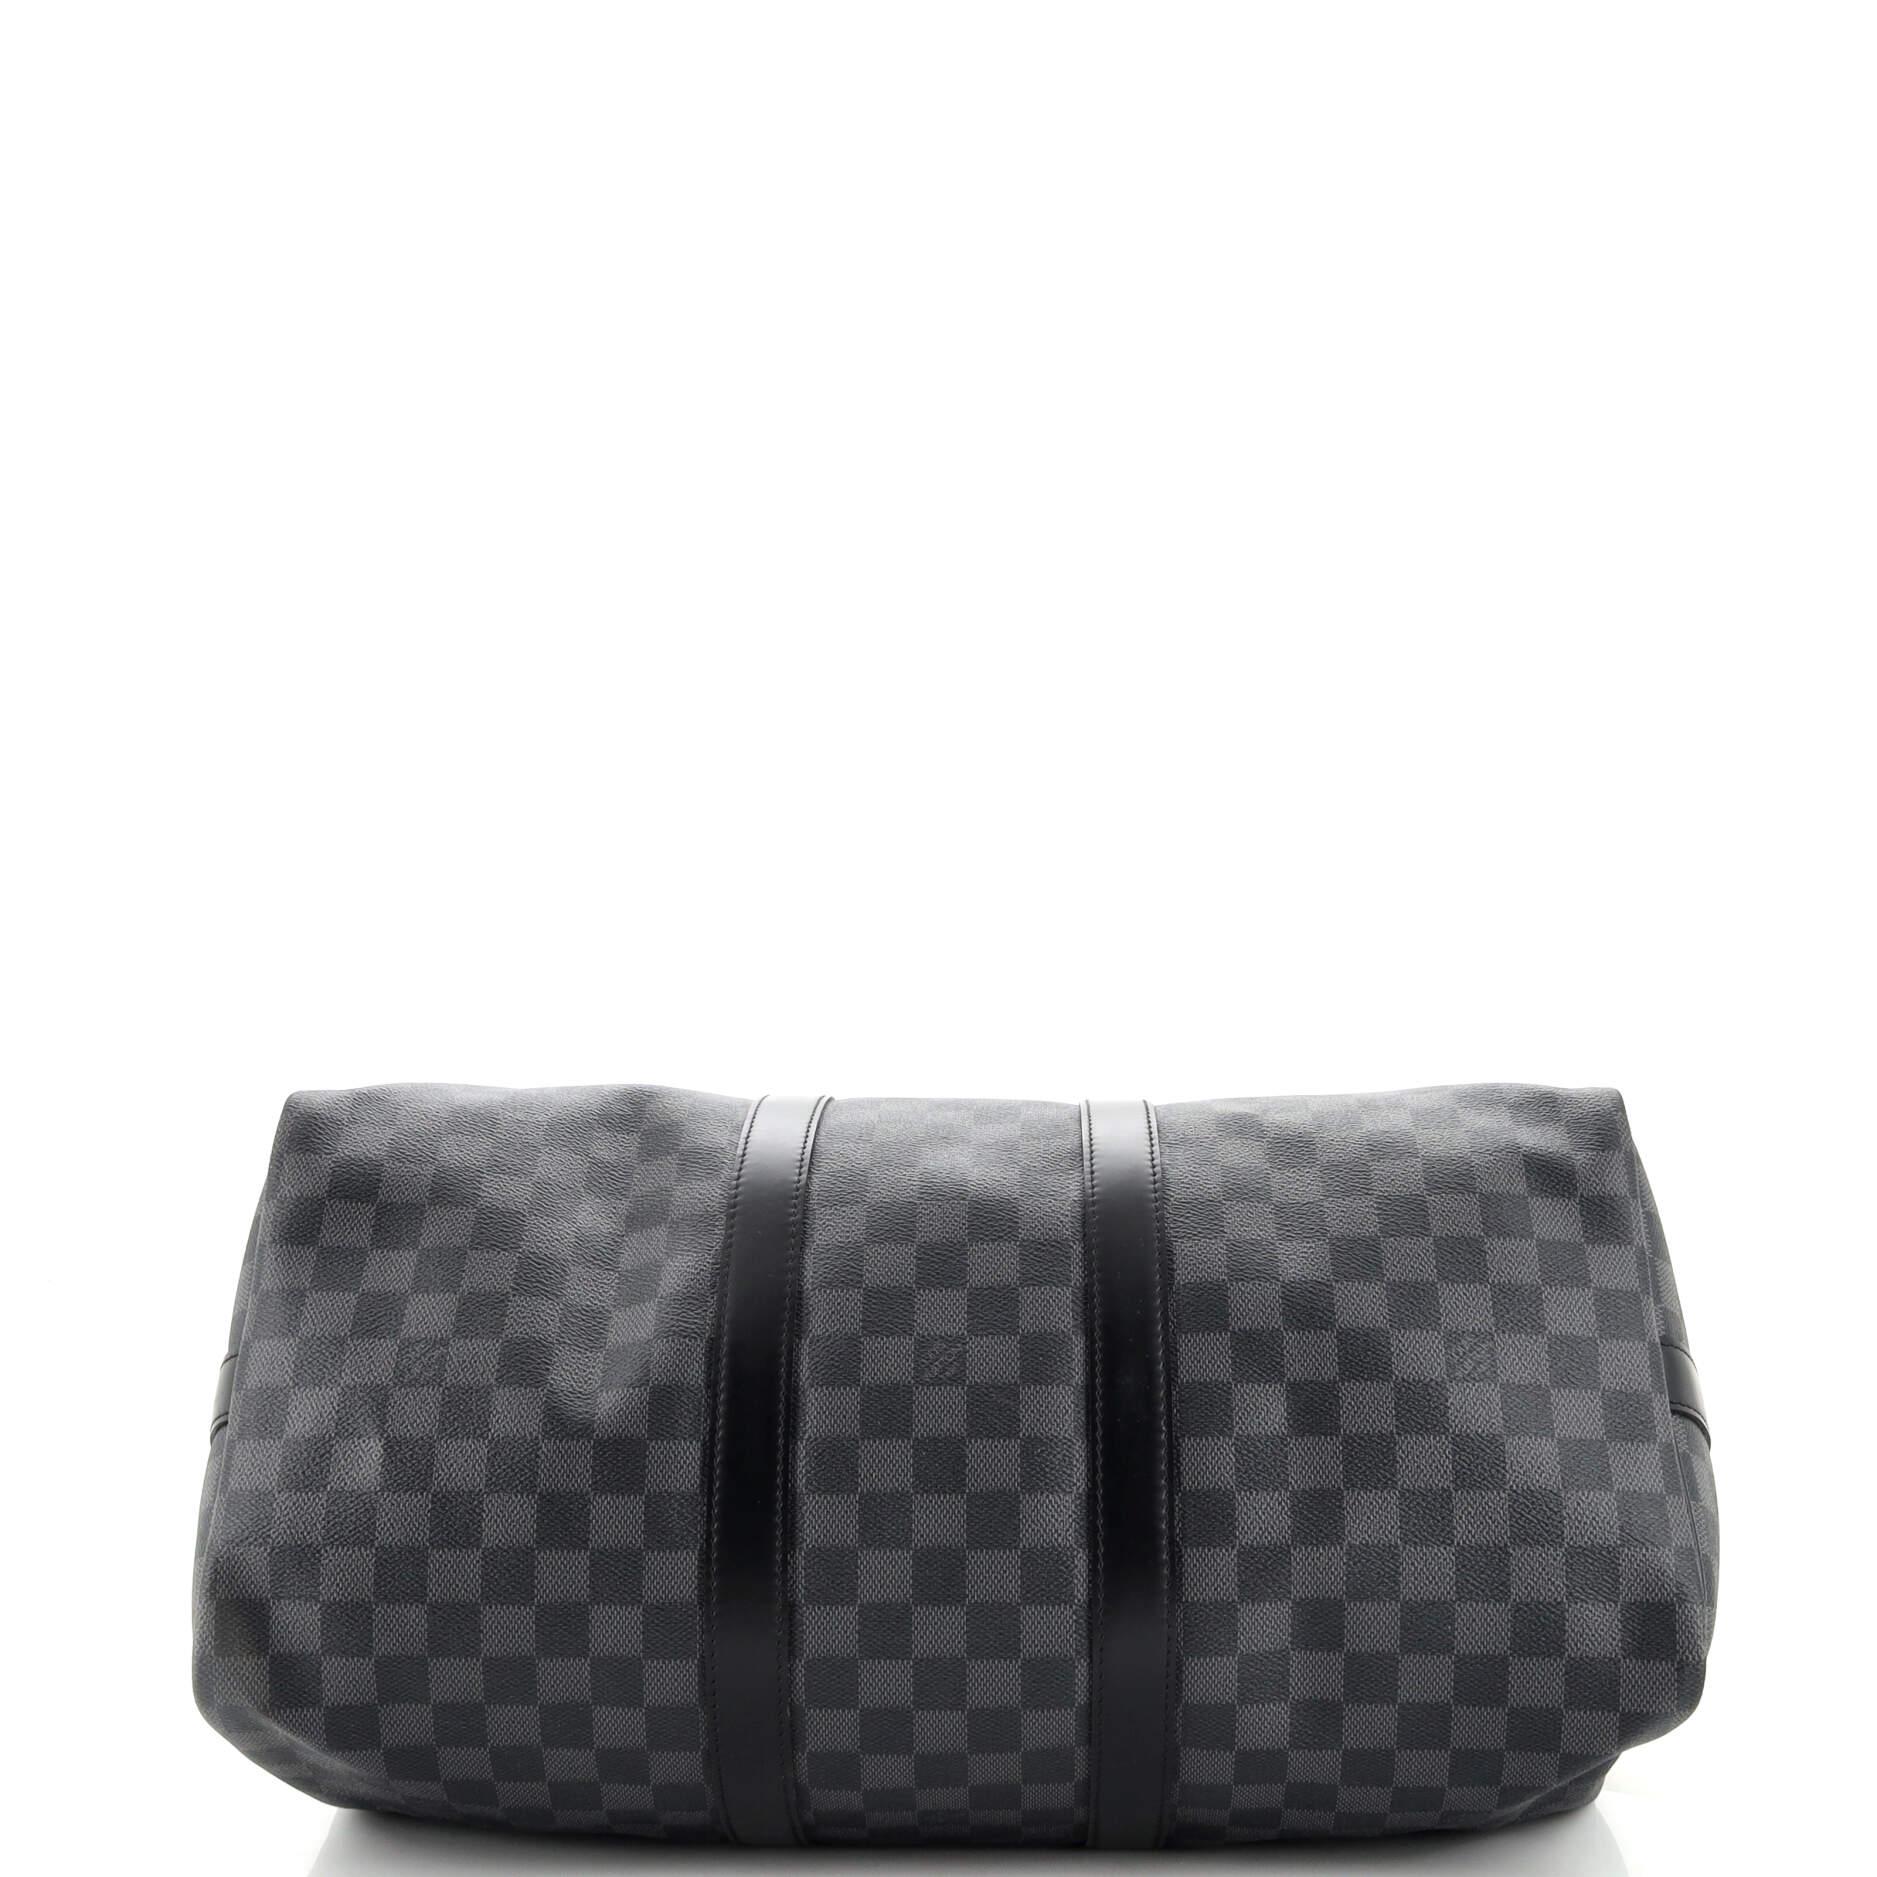 Women's or Men's Louis Vuitton Keepall Bandouliere Bag Damier Graphite 45